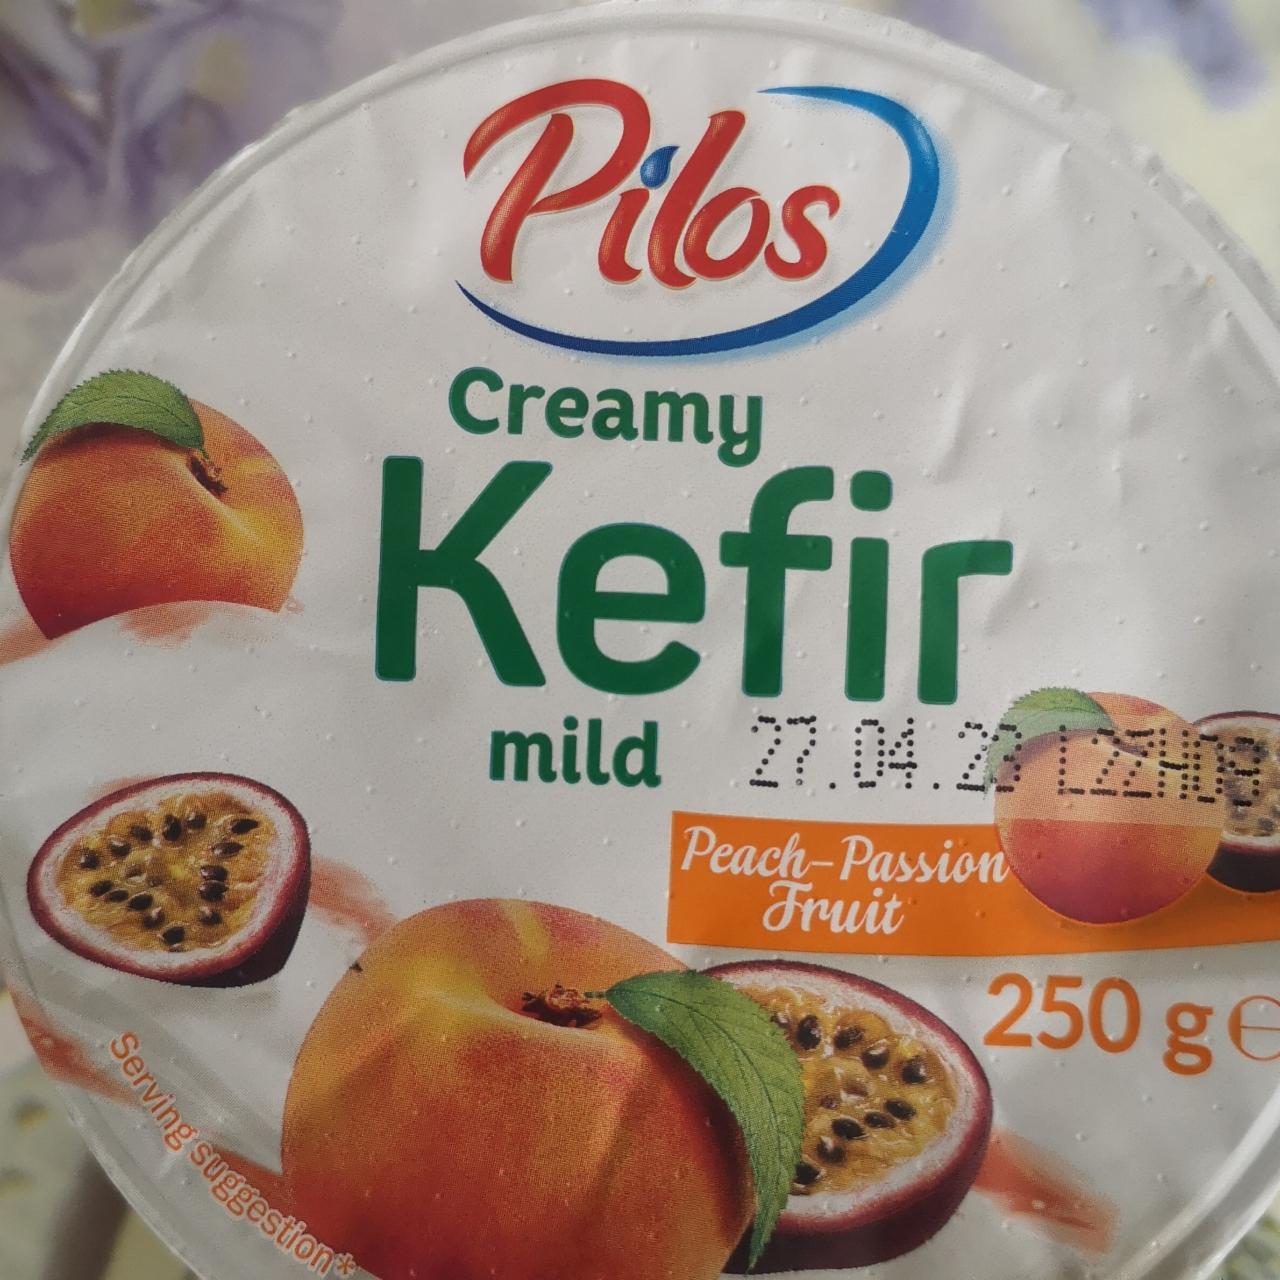 Fotografie - Creamy Kefir mild Peach-Passion Fruit Pilos